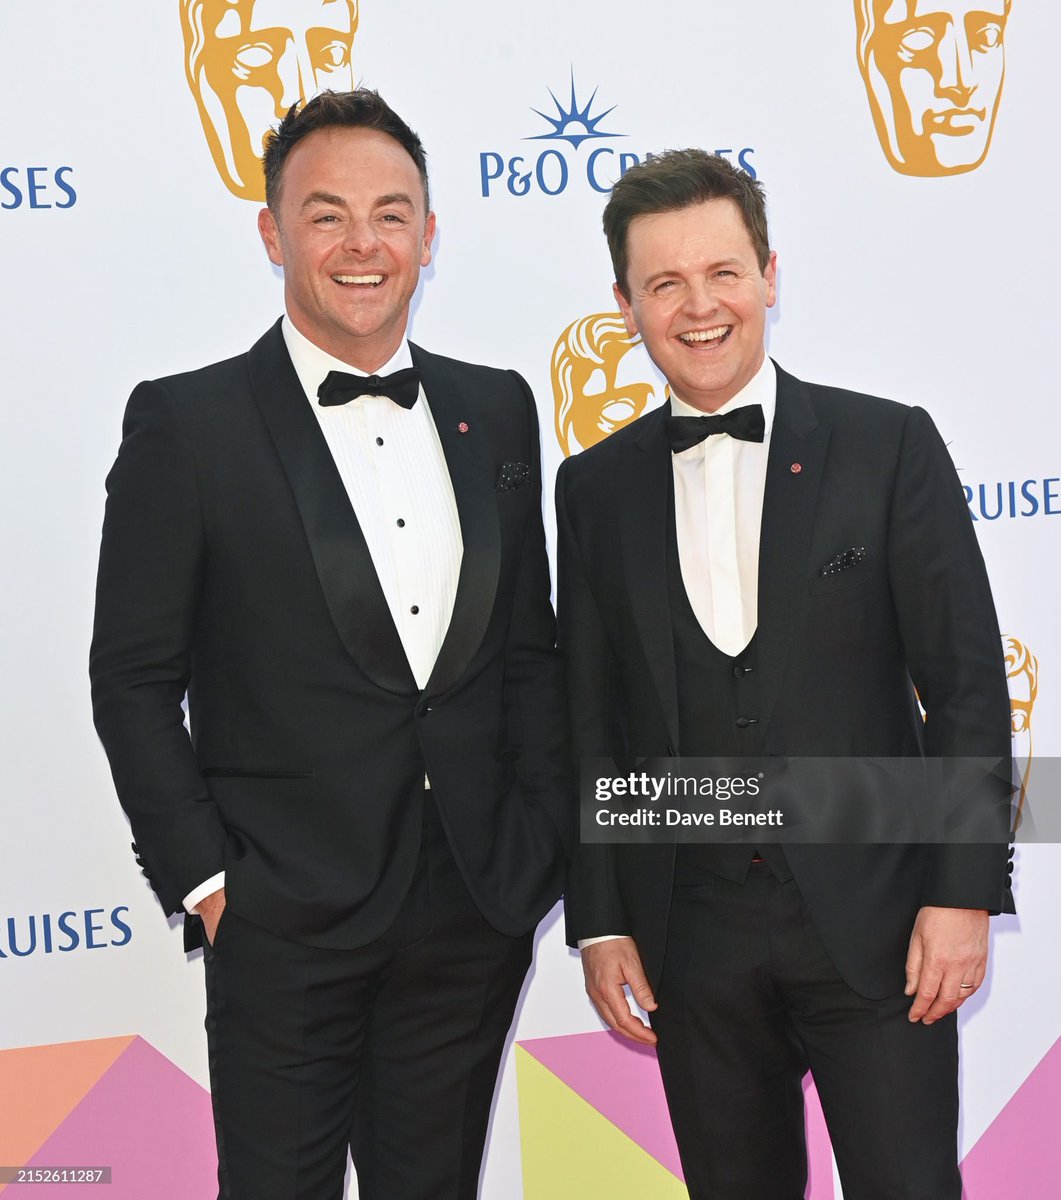 They both look SO handsome 😮‍💨😍

#BAFTATVAwards